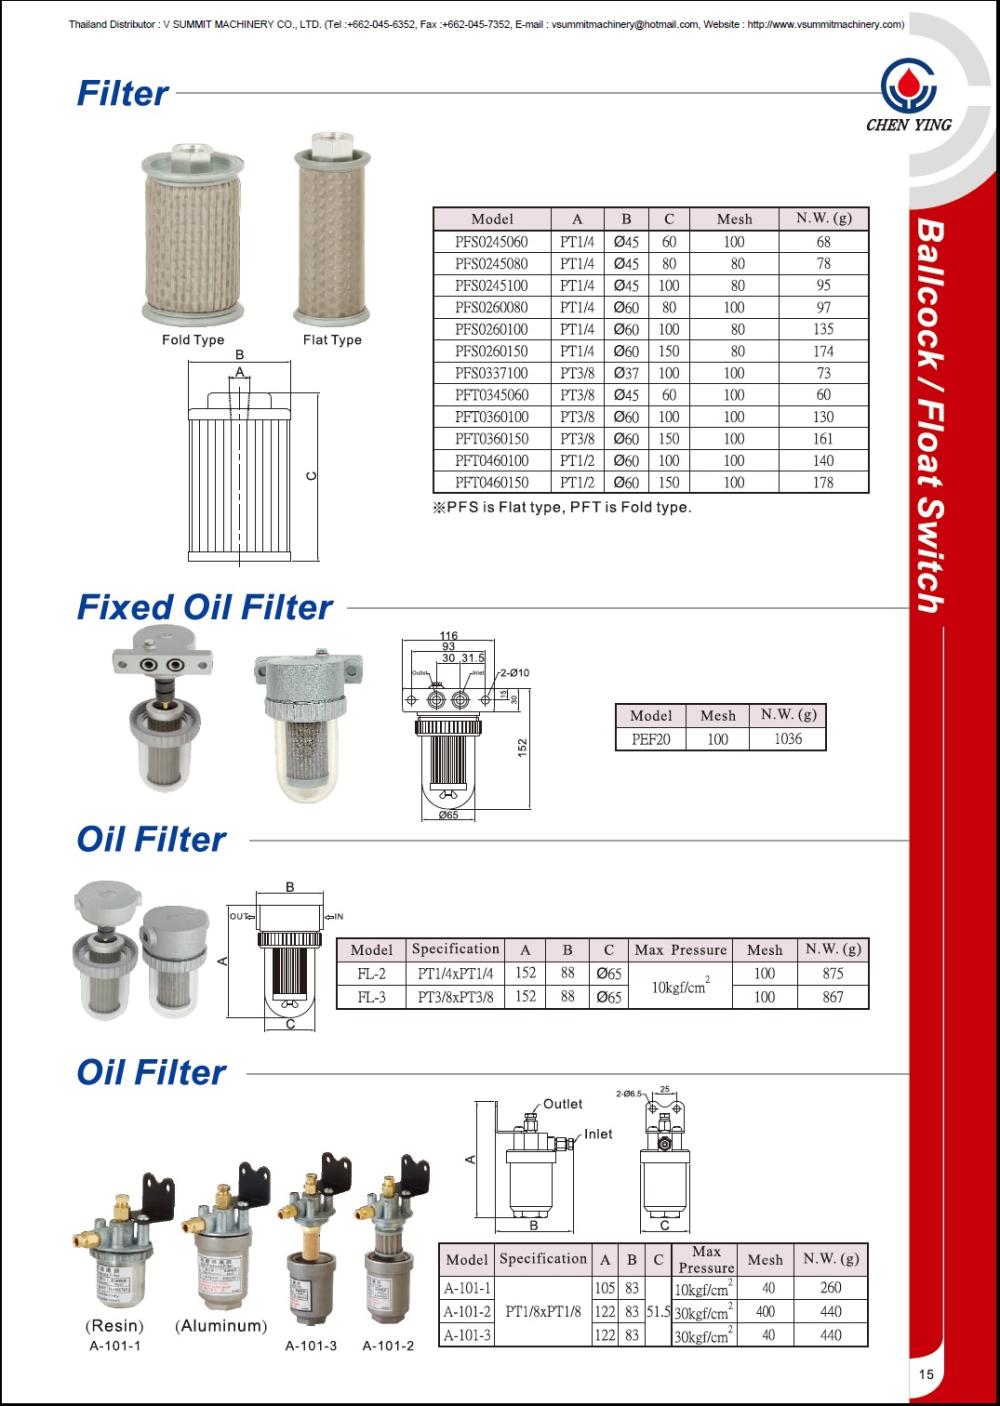 Filter, Oil Filter, Fixed Oil Filter, ฟิลเตอร์, ไส้กรองน้ำมัน, ไส้กรอง